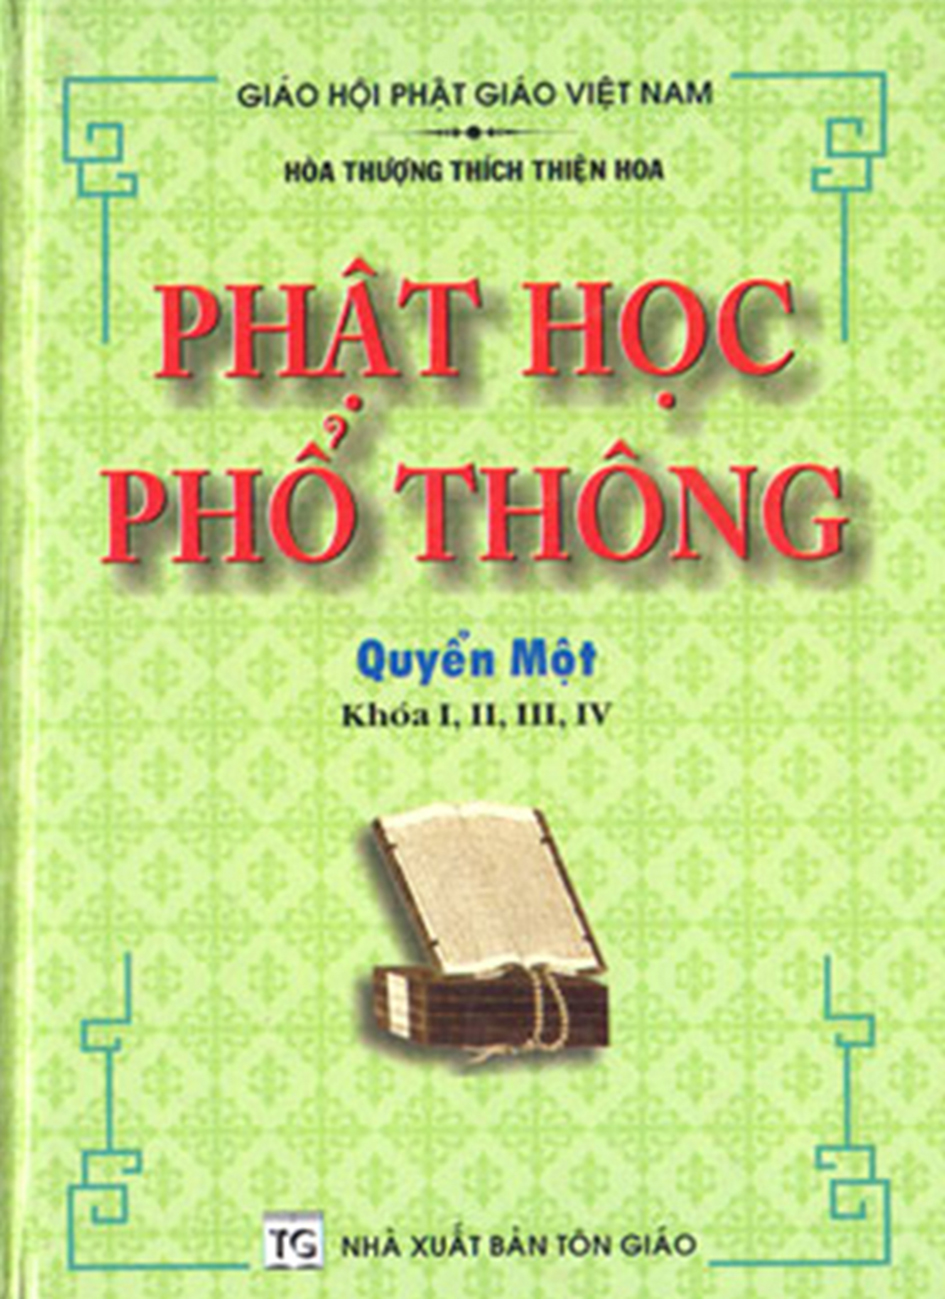 phat hoc pho thong